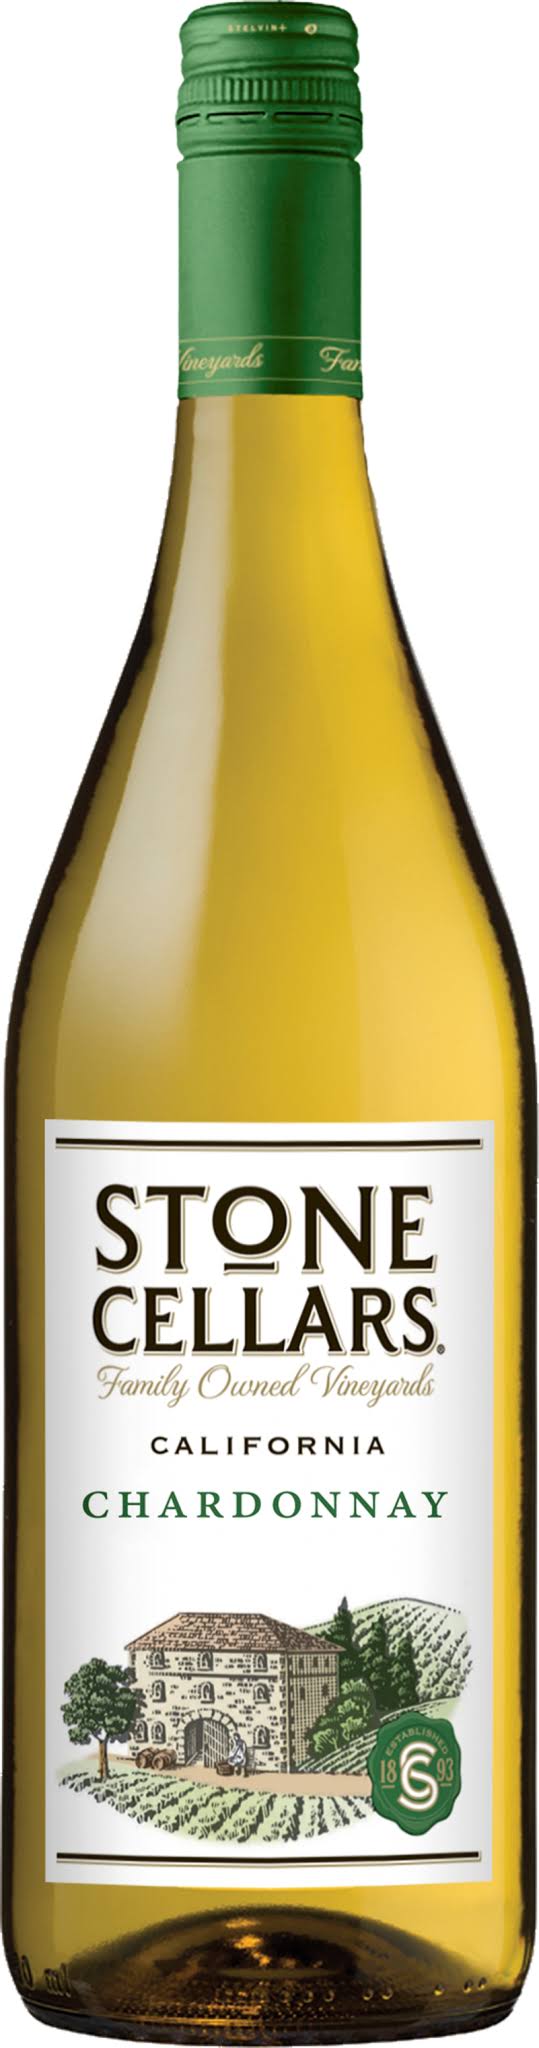 Stone Cellars California Chardonnay 2015, Medium Dry